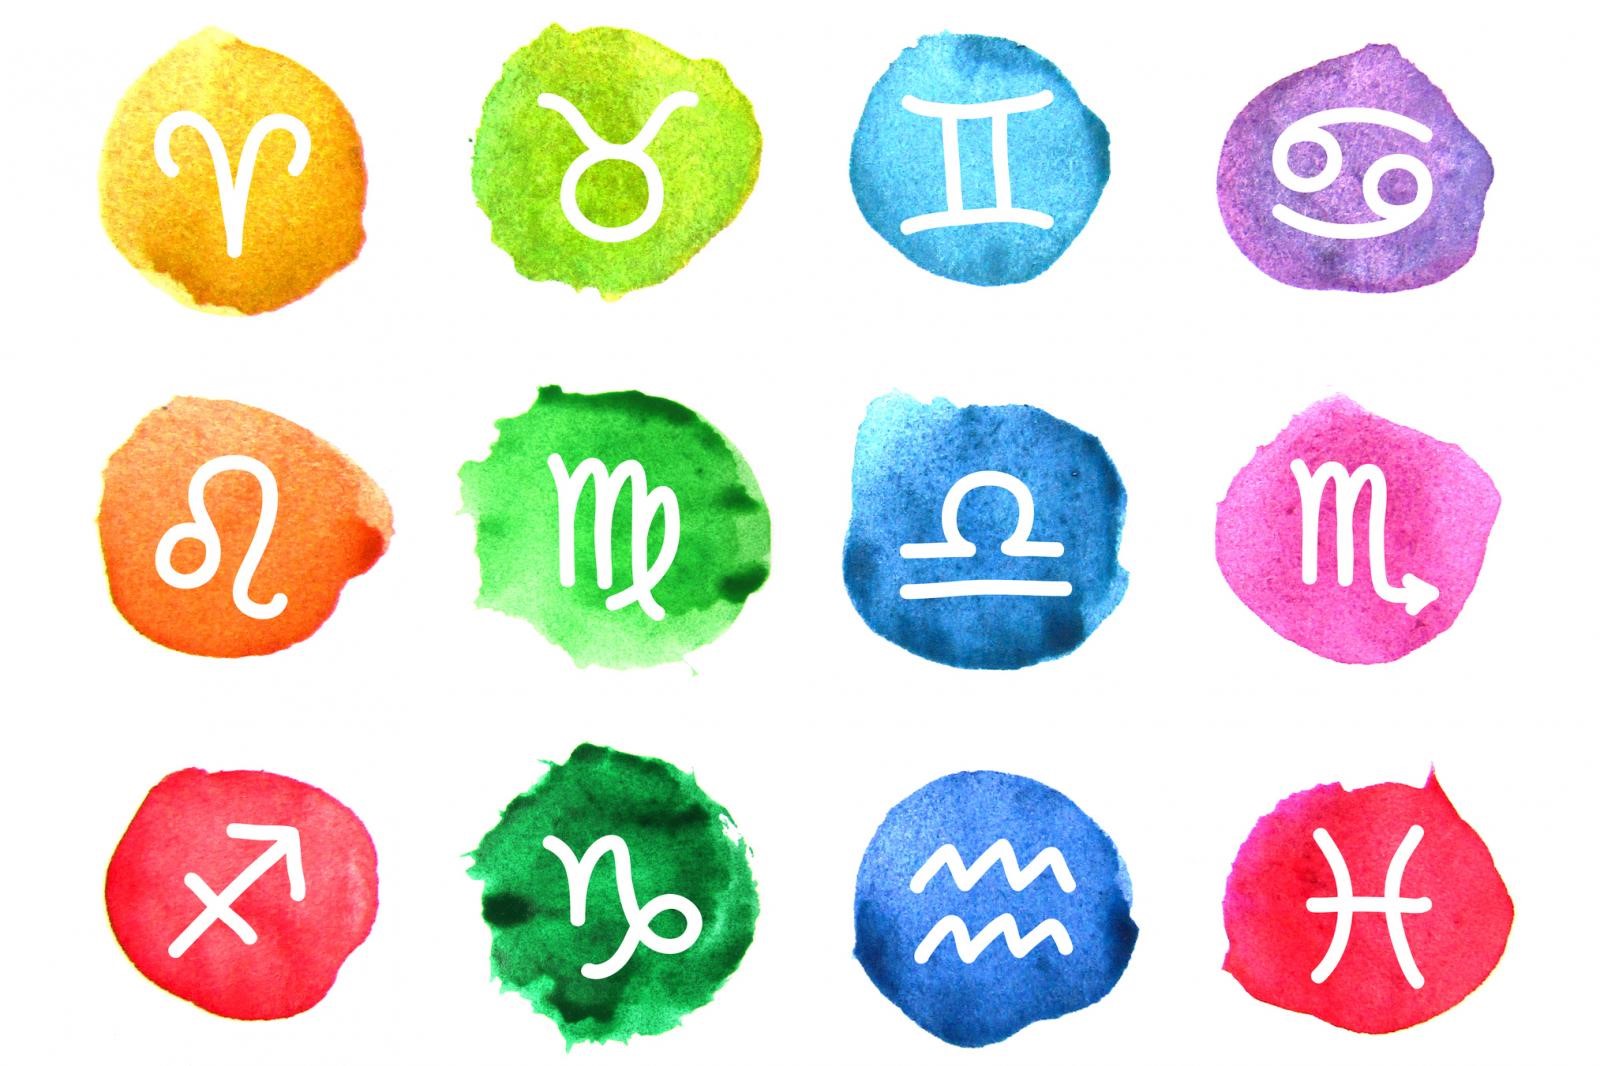 Zodiac Signs
